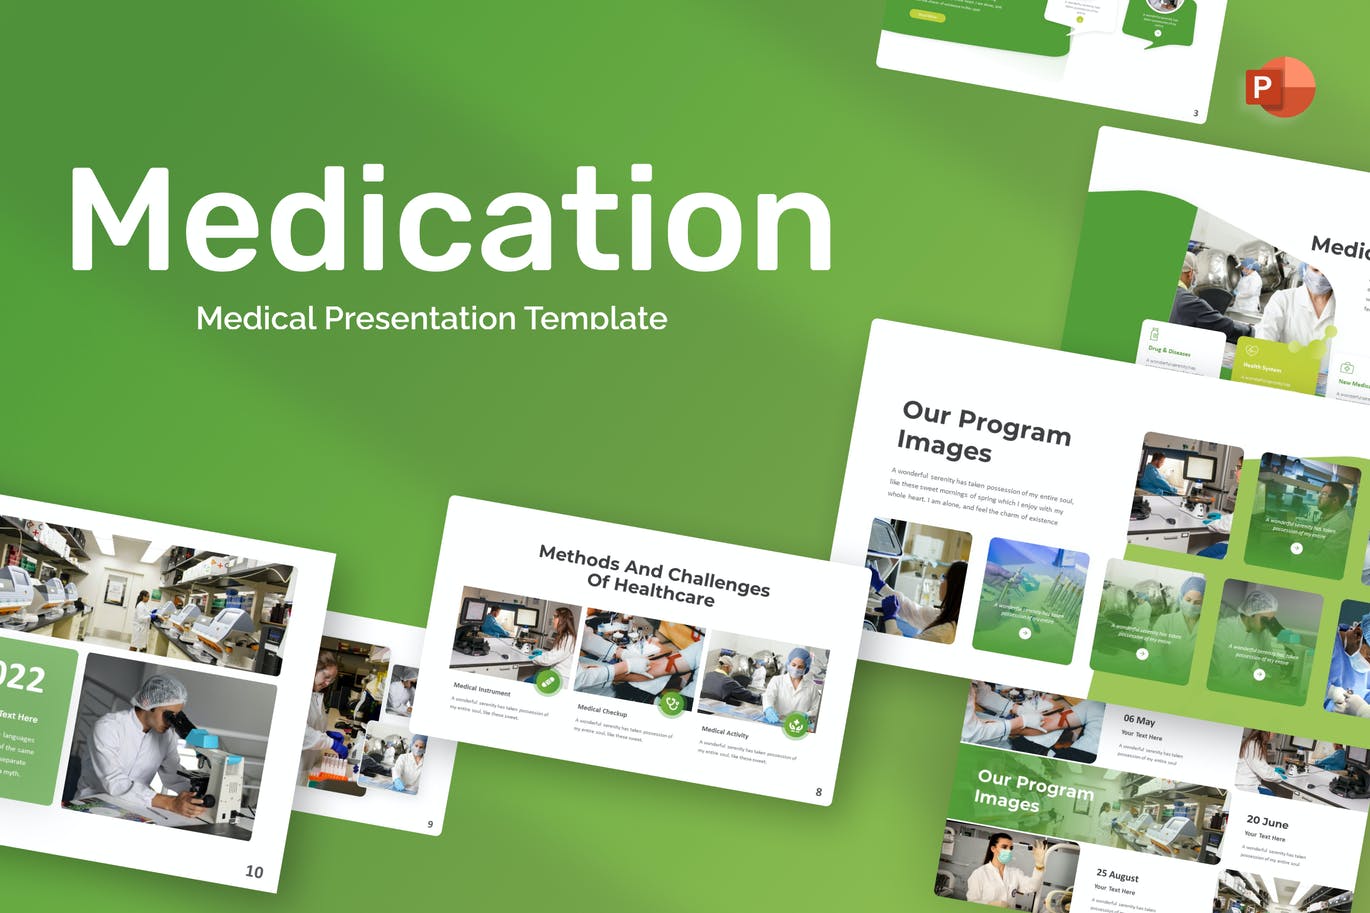 药物医学主题PPT幻灯片设计模板 Medication Medical PowerPoint Template 幻灯图表 第1张